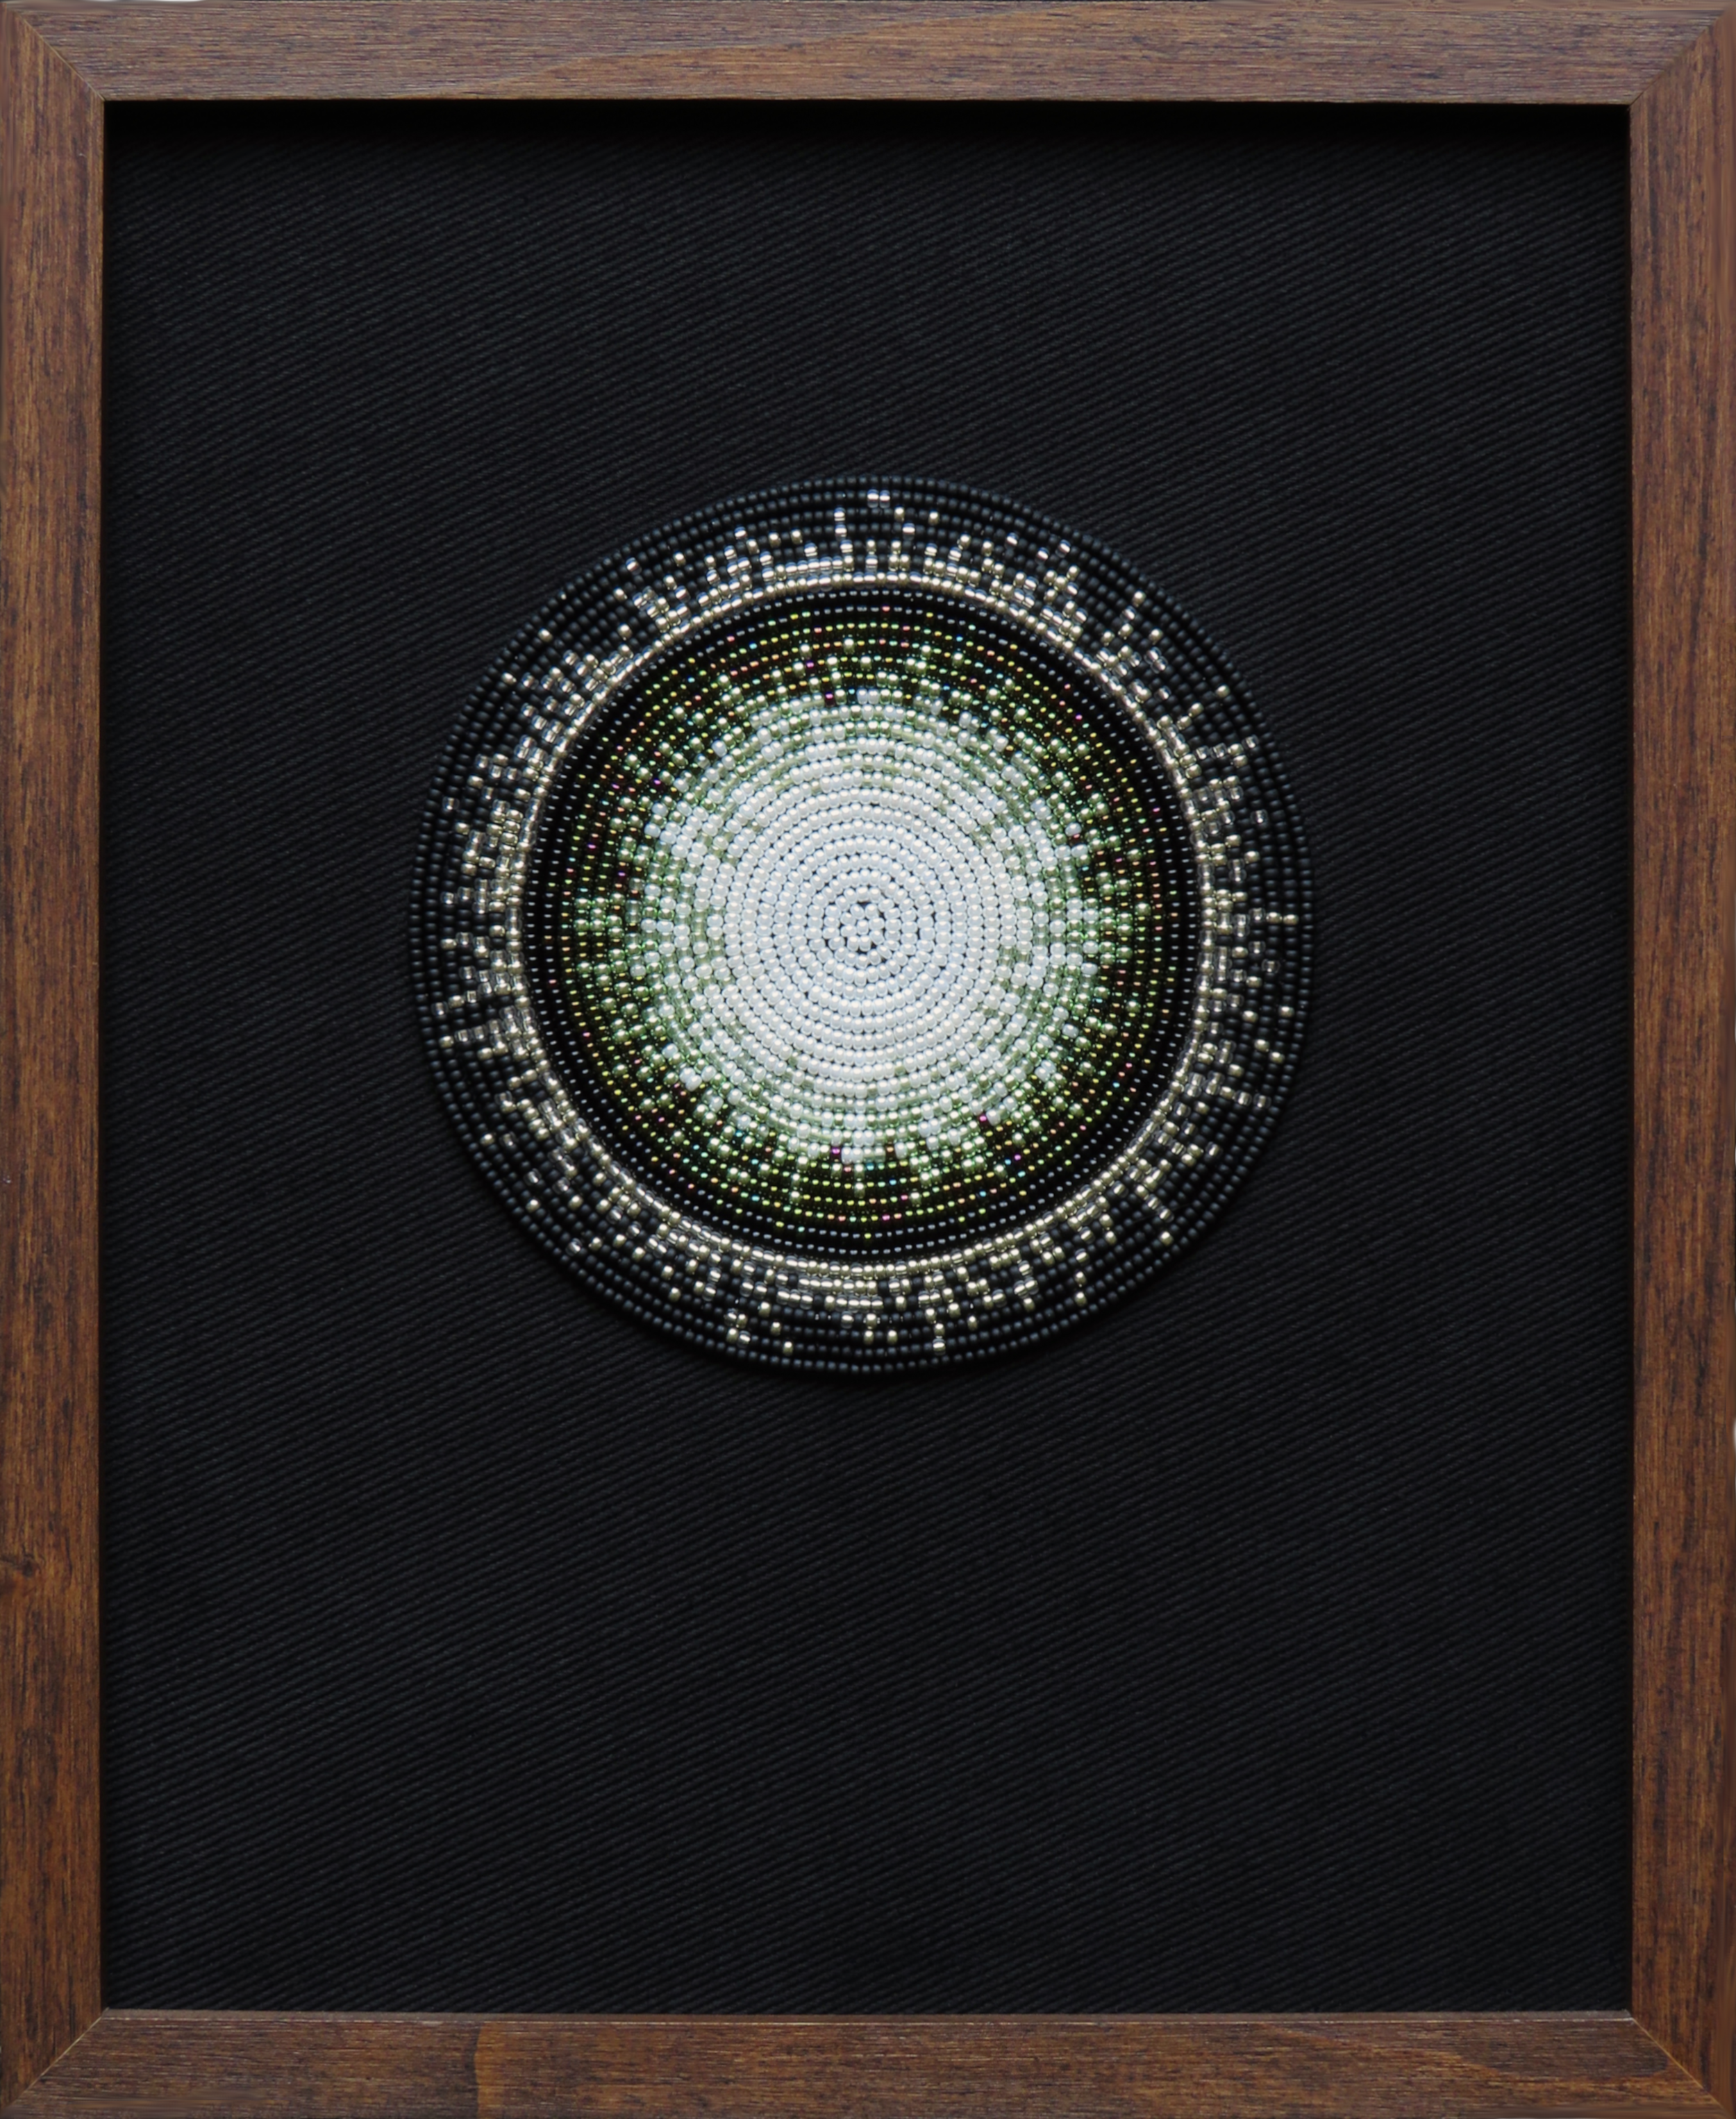 NOS VIES DEVANT NOUS  
Miyuki 11/0 seed beads · appliqué on denim 
 masonite panel mount · 8” x 10”  
 2021-2023 · private collection